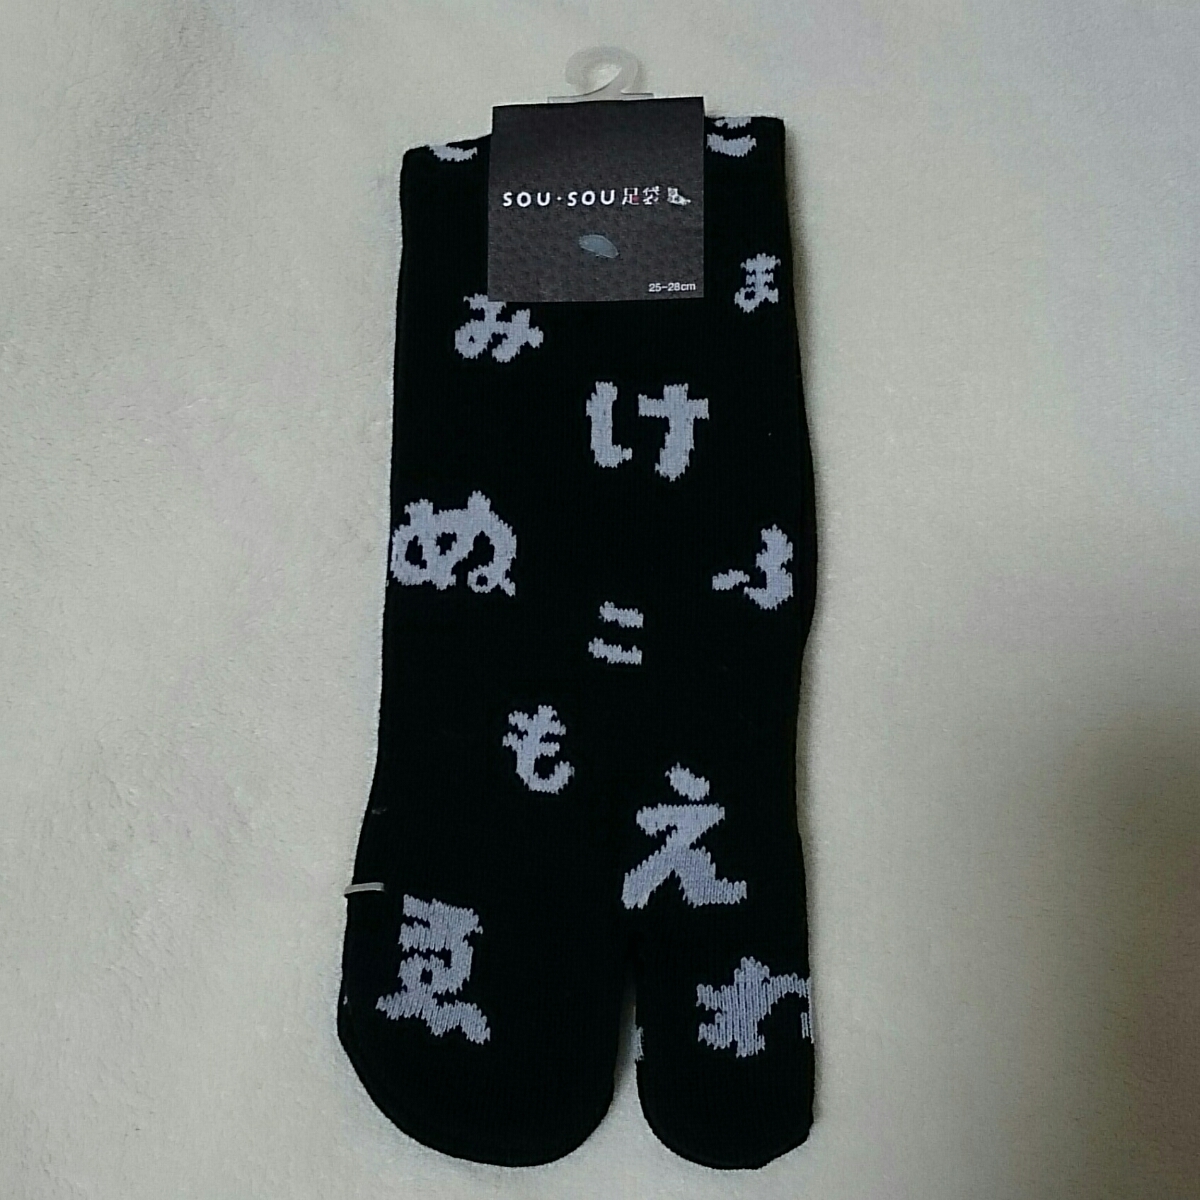 sousou 25cm～28cm  носки  ...   ...  нога  мешок  низ    нога  мешок  ... ...  мода   ... ...  мужской  japan socks hiragana nihongo  японский язык 